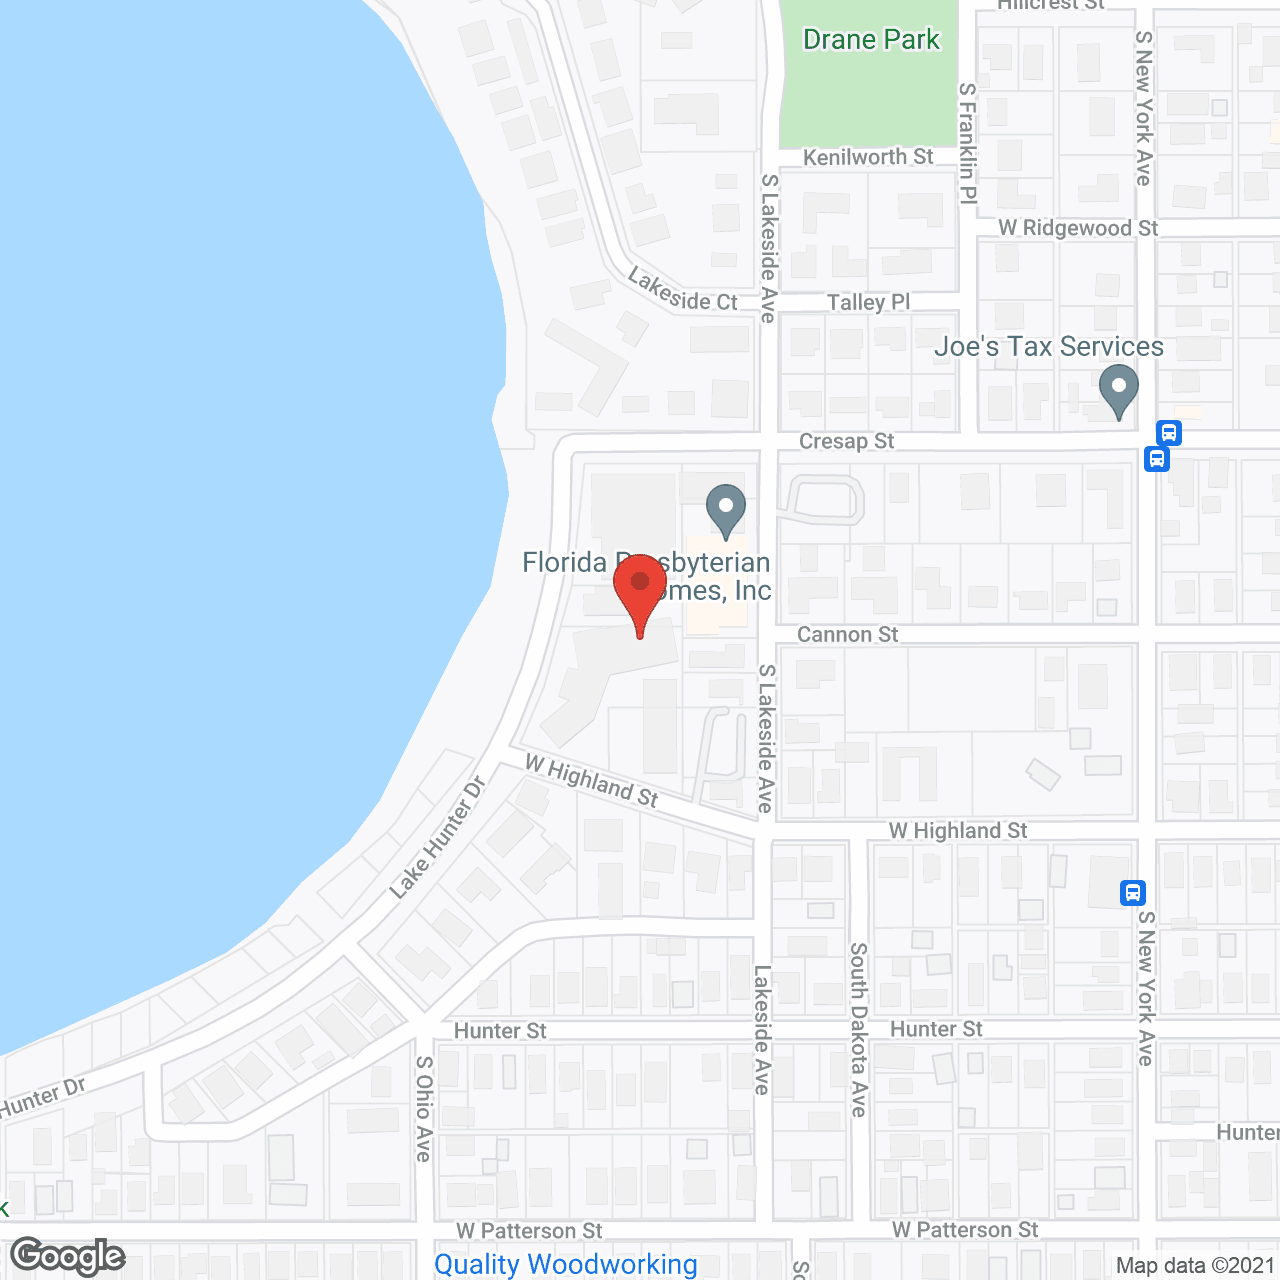 Florida Presbyterian Homes Inc in google map